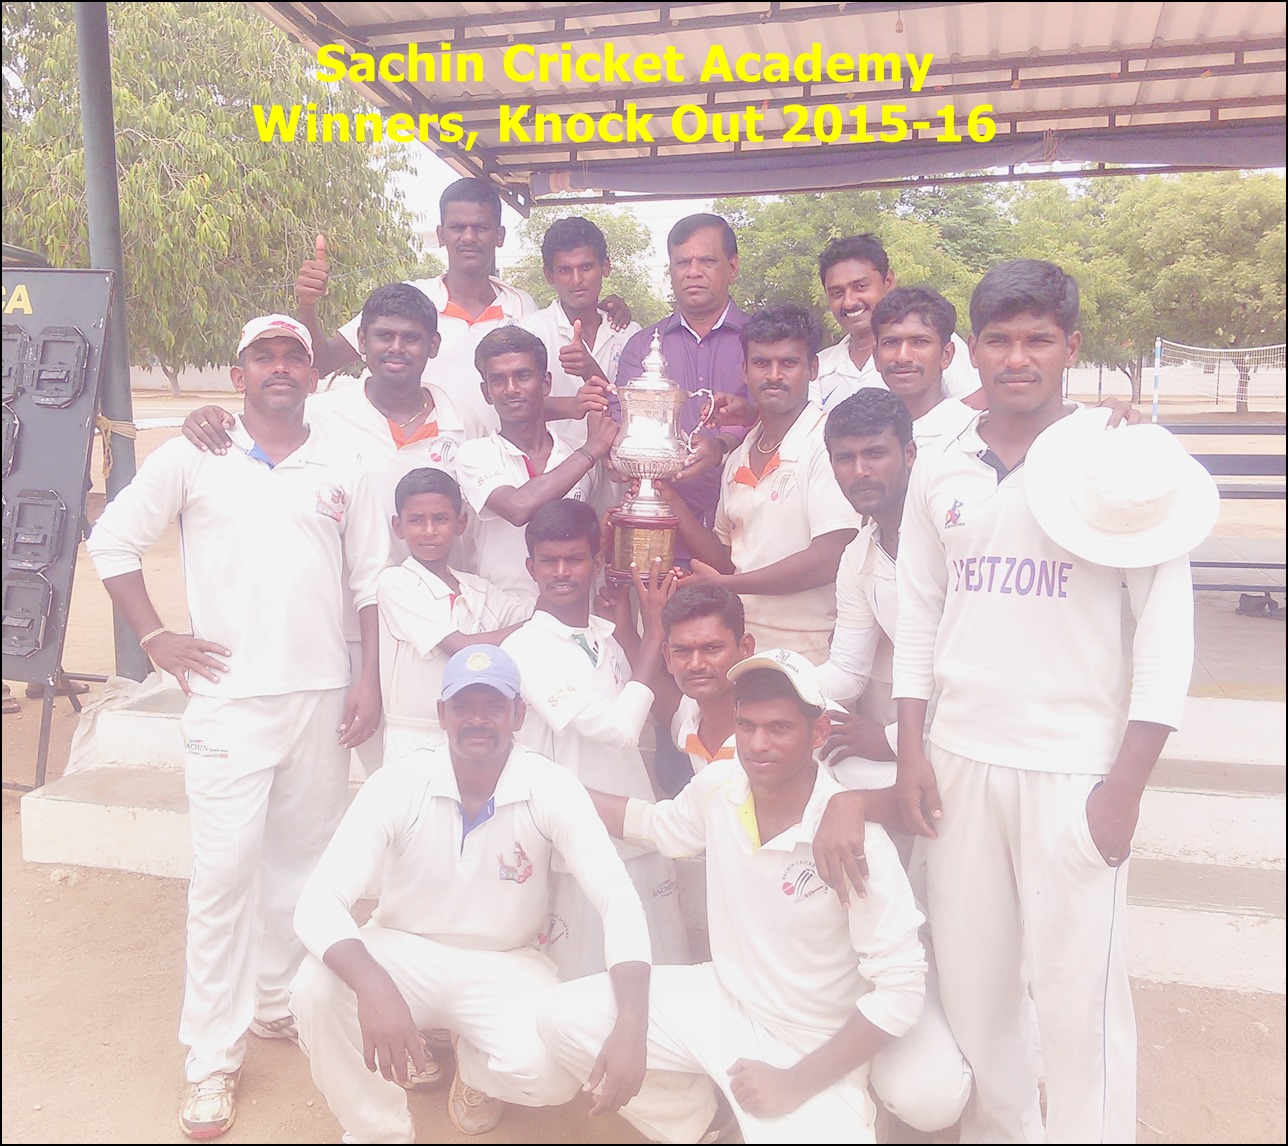 Sachin Cricket Academy